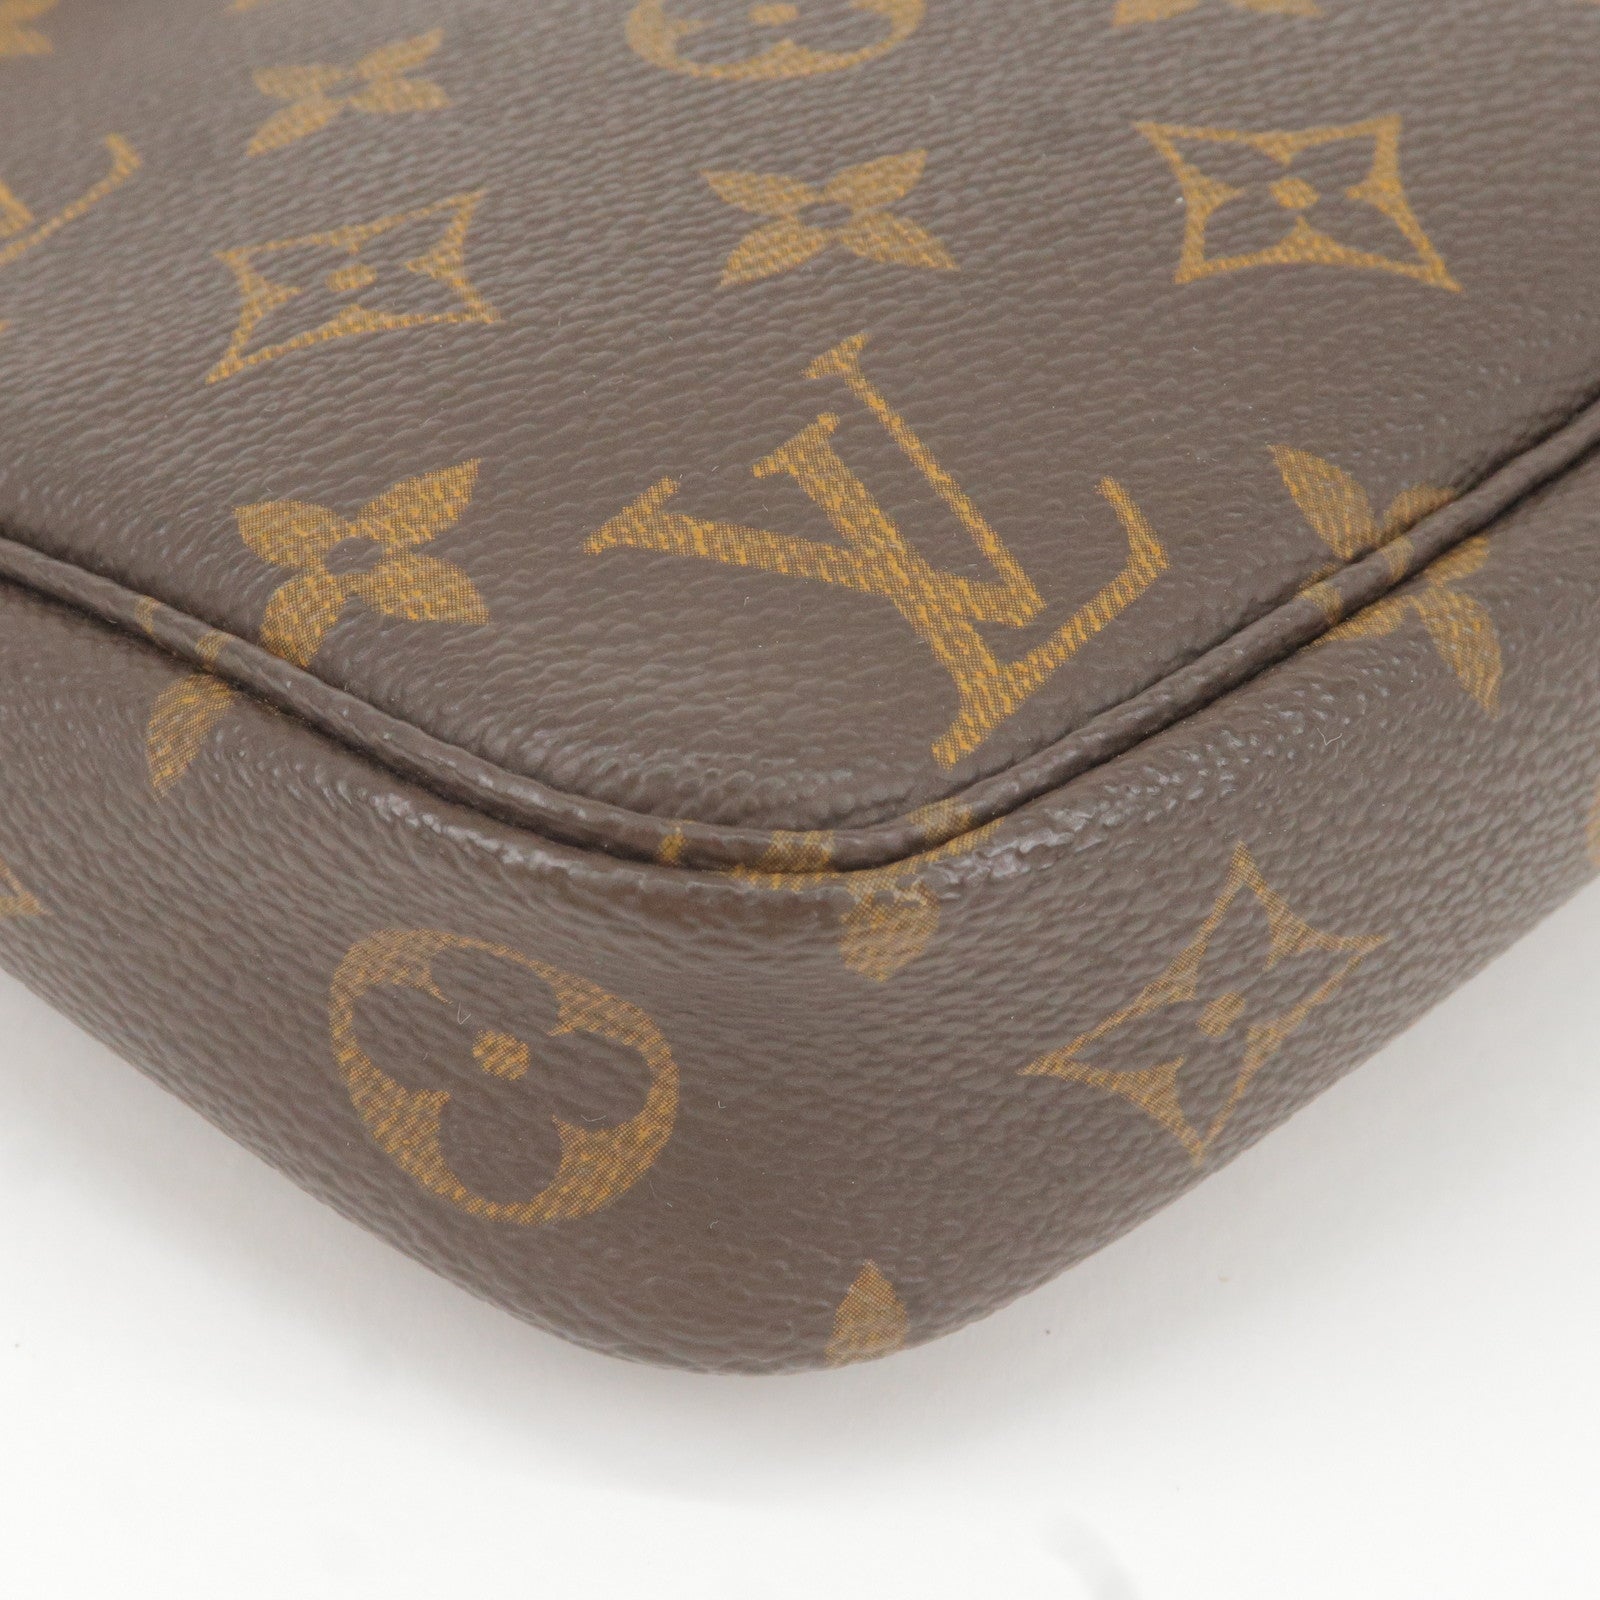 Louis Vuitton Dauphine 25MM Reversible LV Monogram Belt - Brown